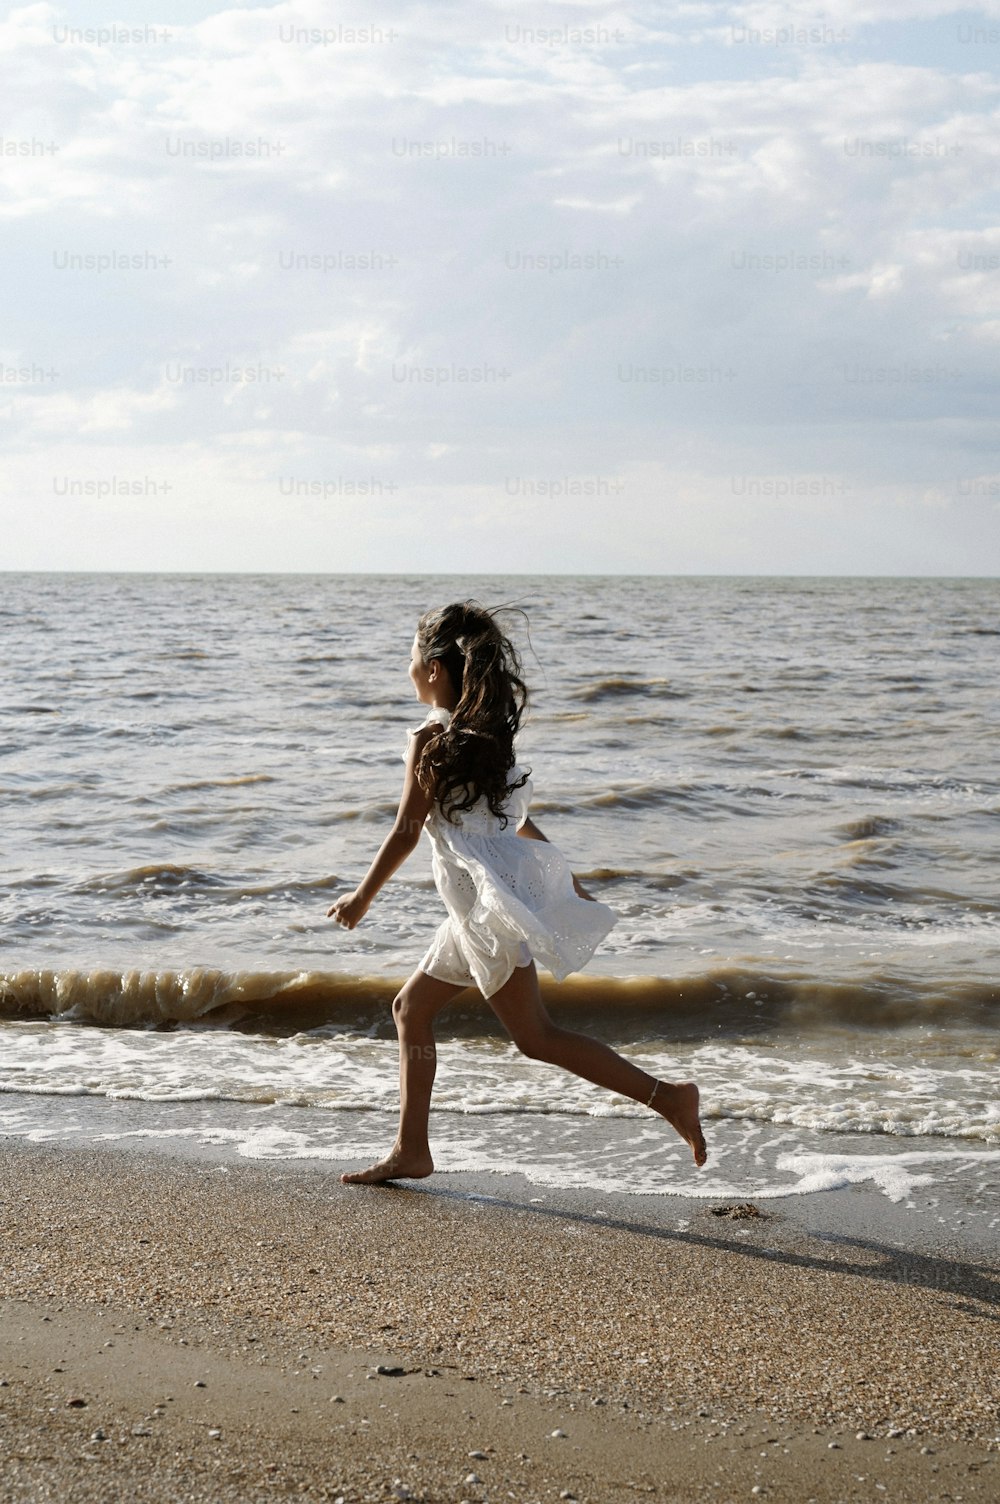 a young girl running along the beach towards the ocean